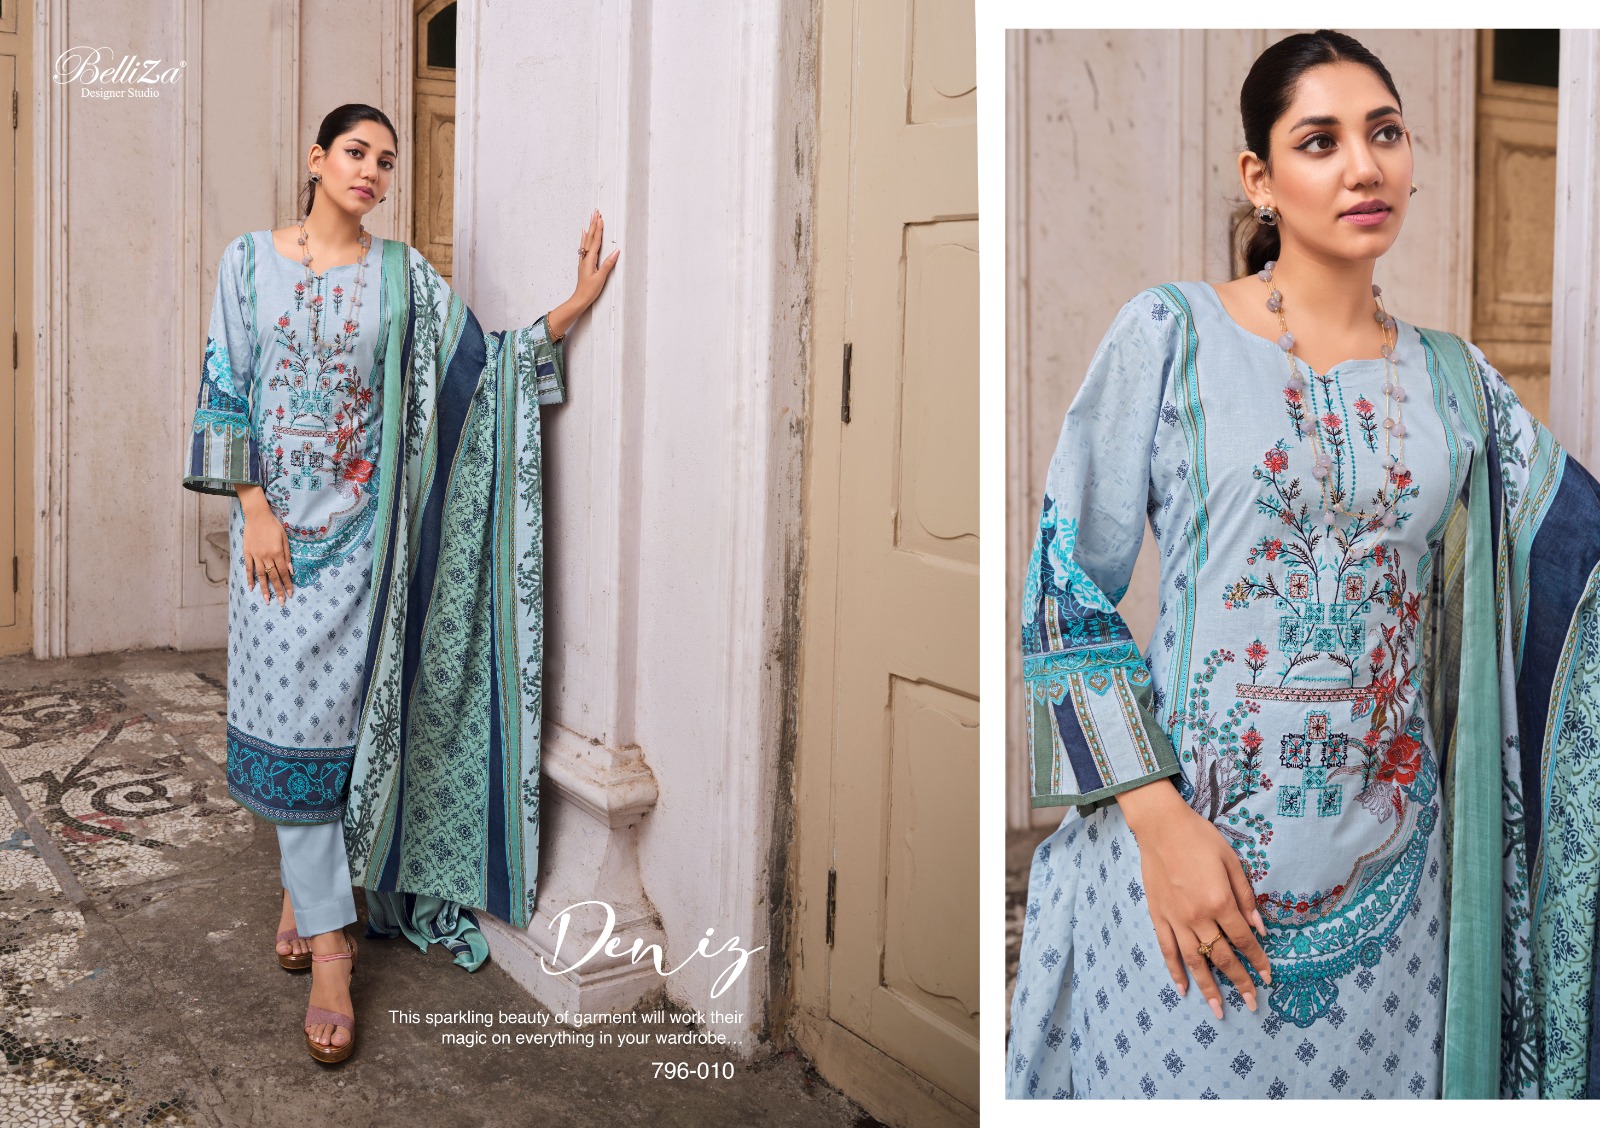 belliza designer studio naira vol 10 cotton attrective look salwar suit catalog